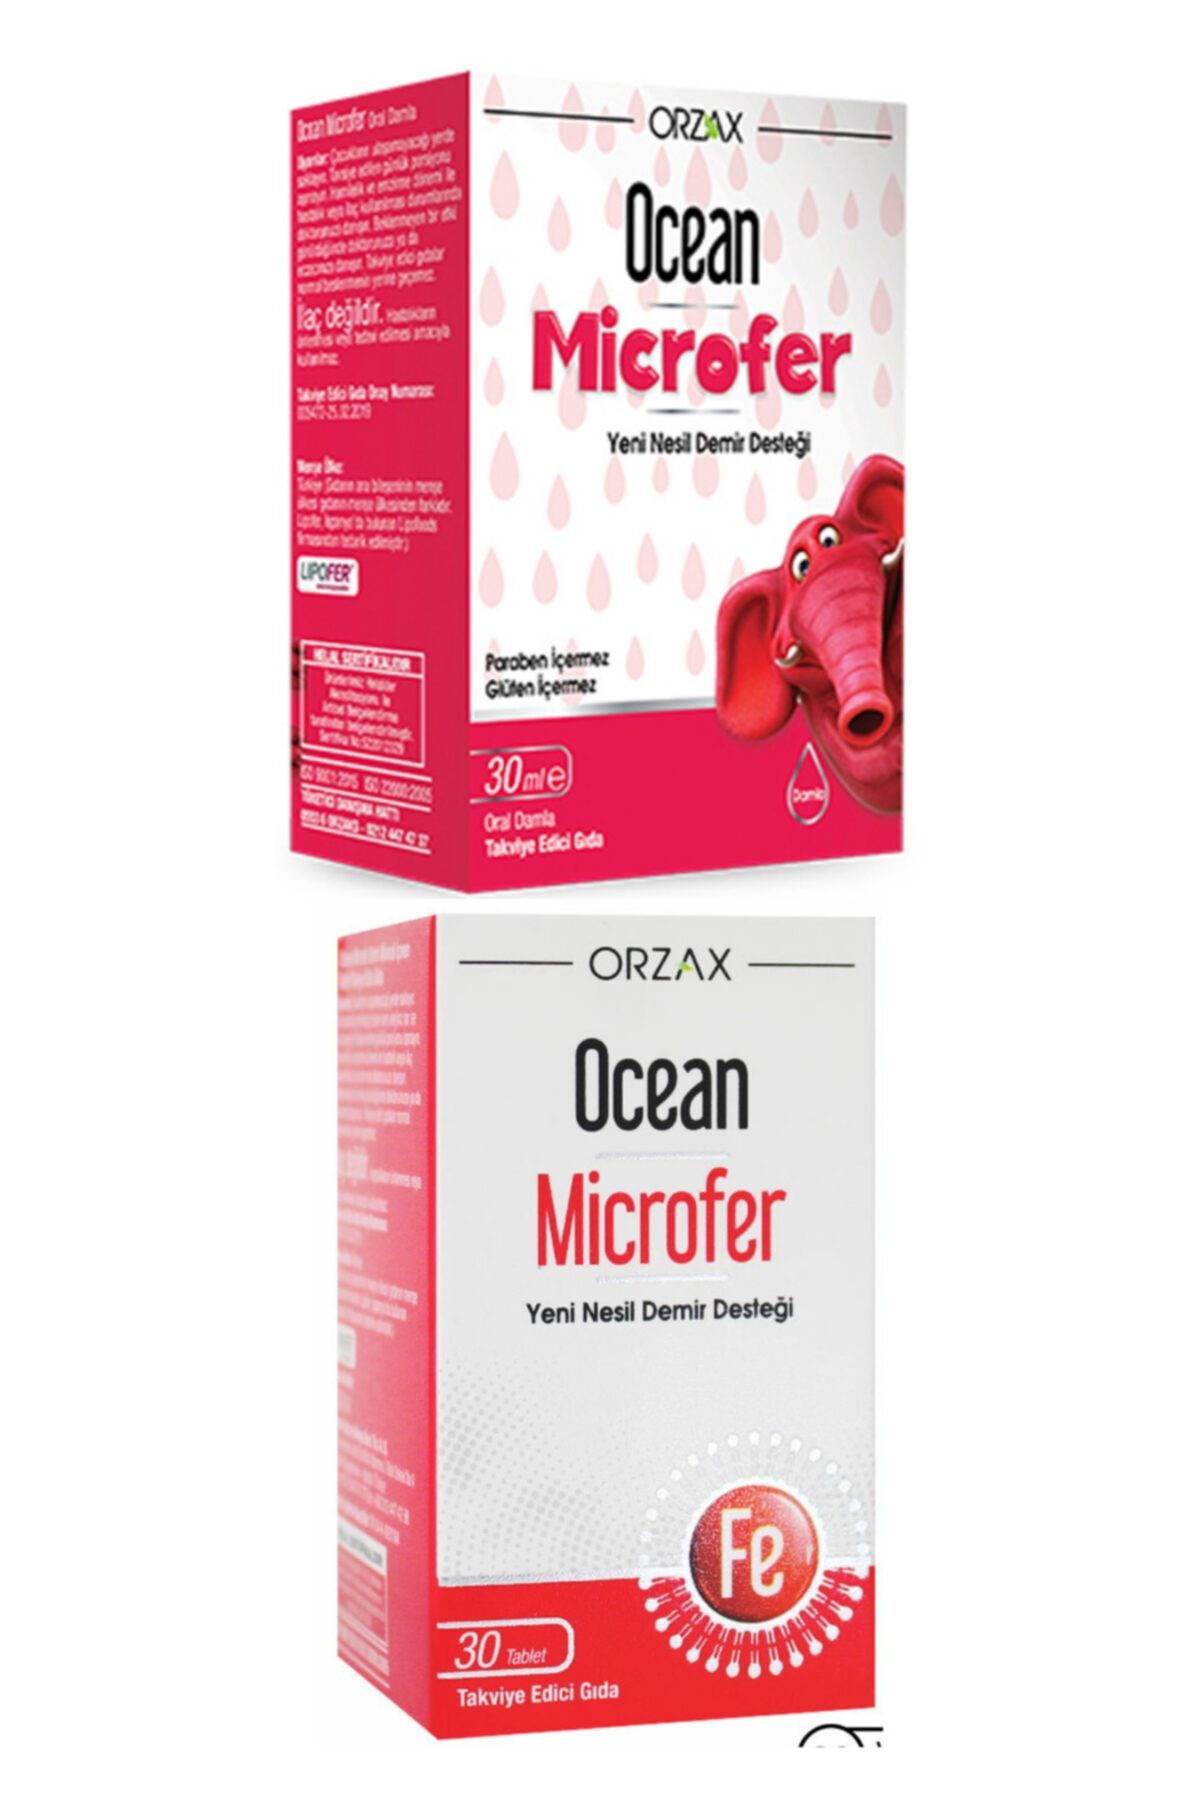 Ocean Microfer Damla 30 ml + Ocean Microfer 30 Tablet Aile Paketi